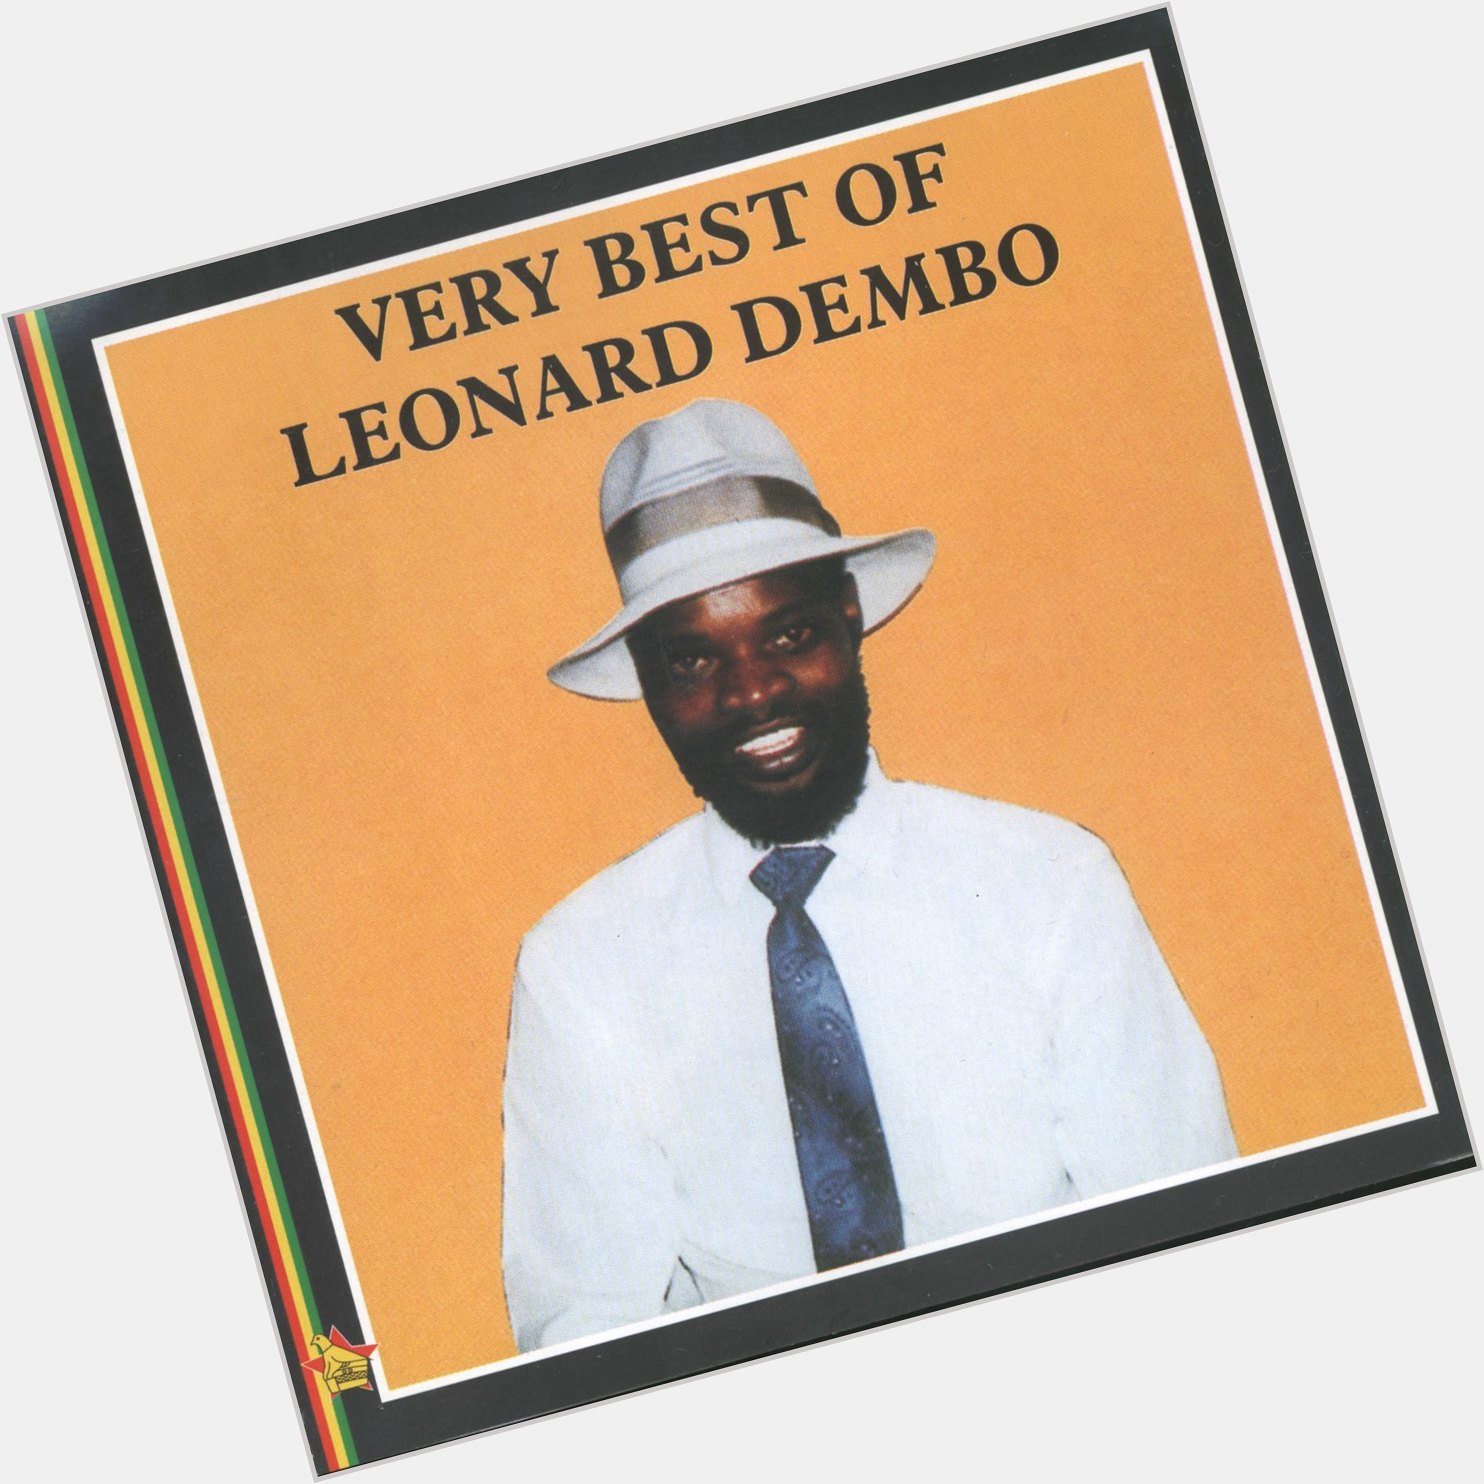 Leonard Dembo birthday 2015